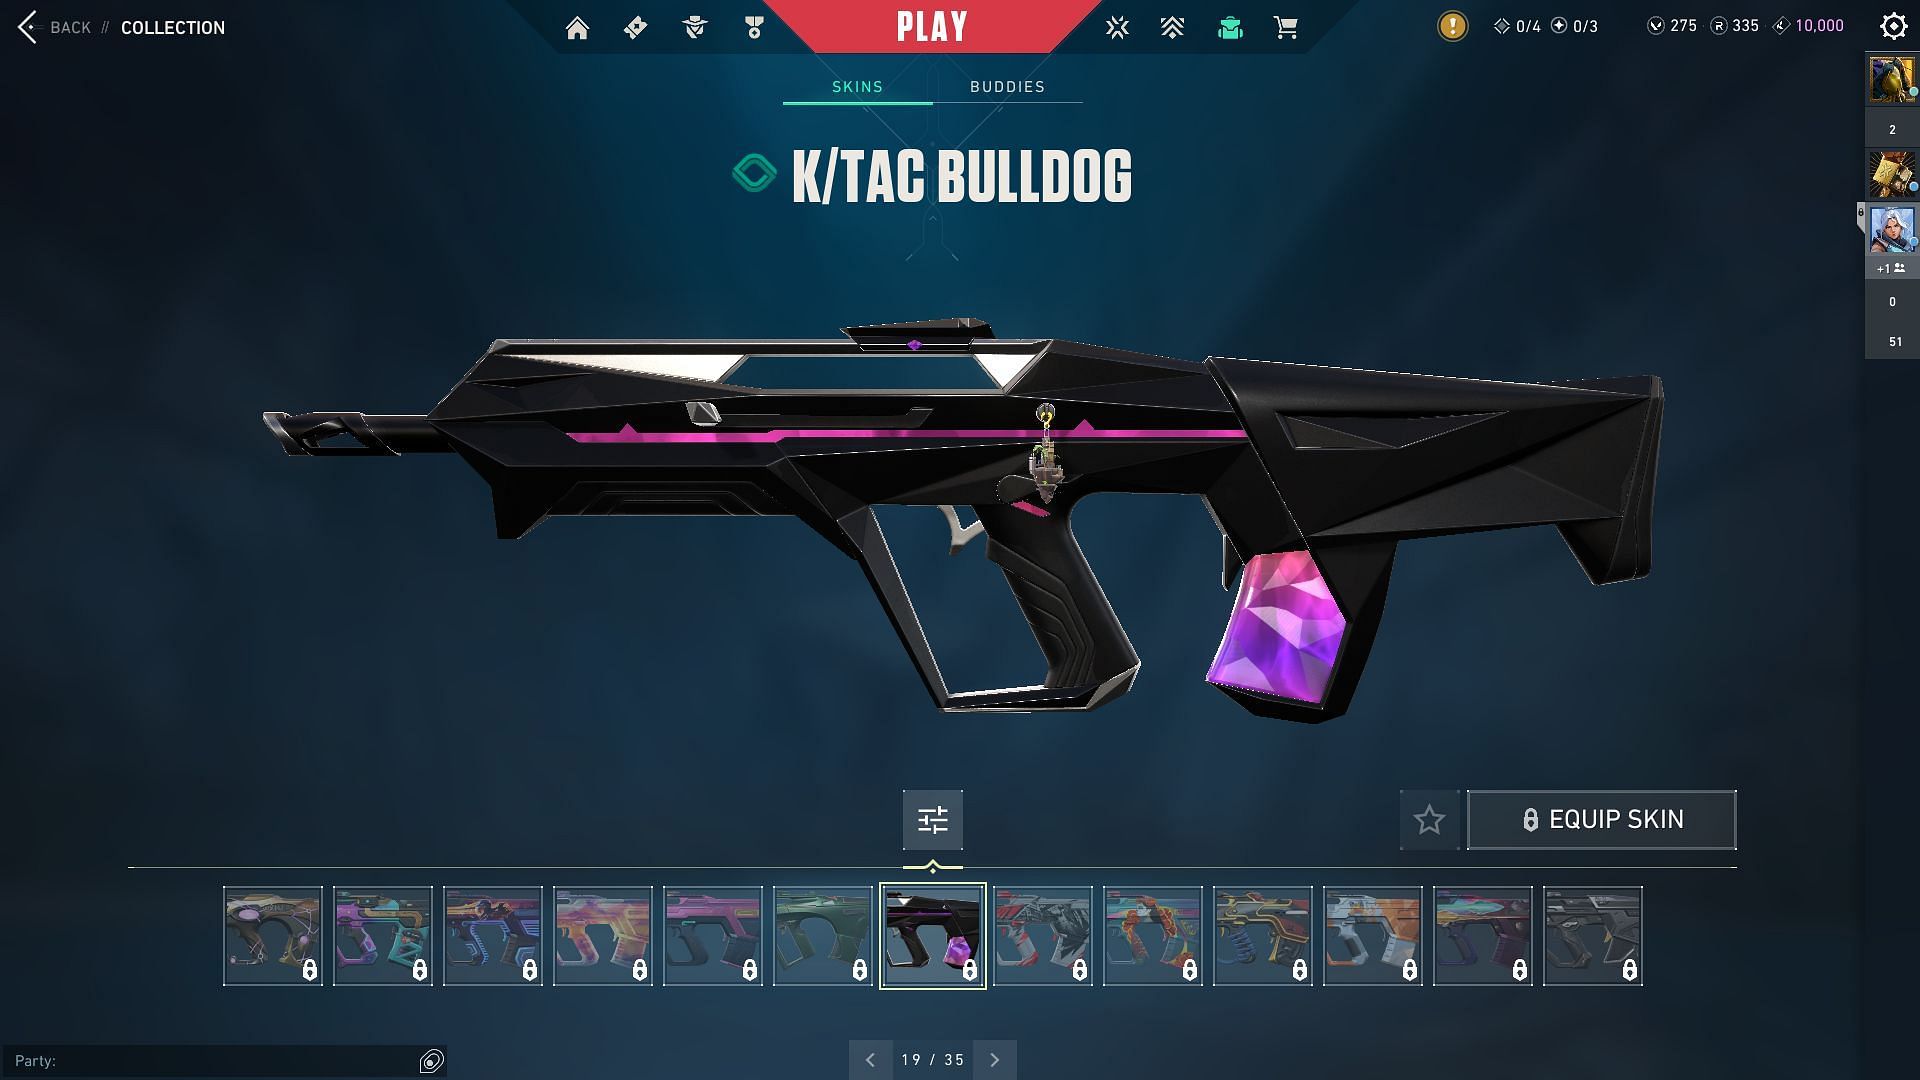 K/Tac Bulldog (Image via Sportskeeda and Riot Games)